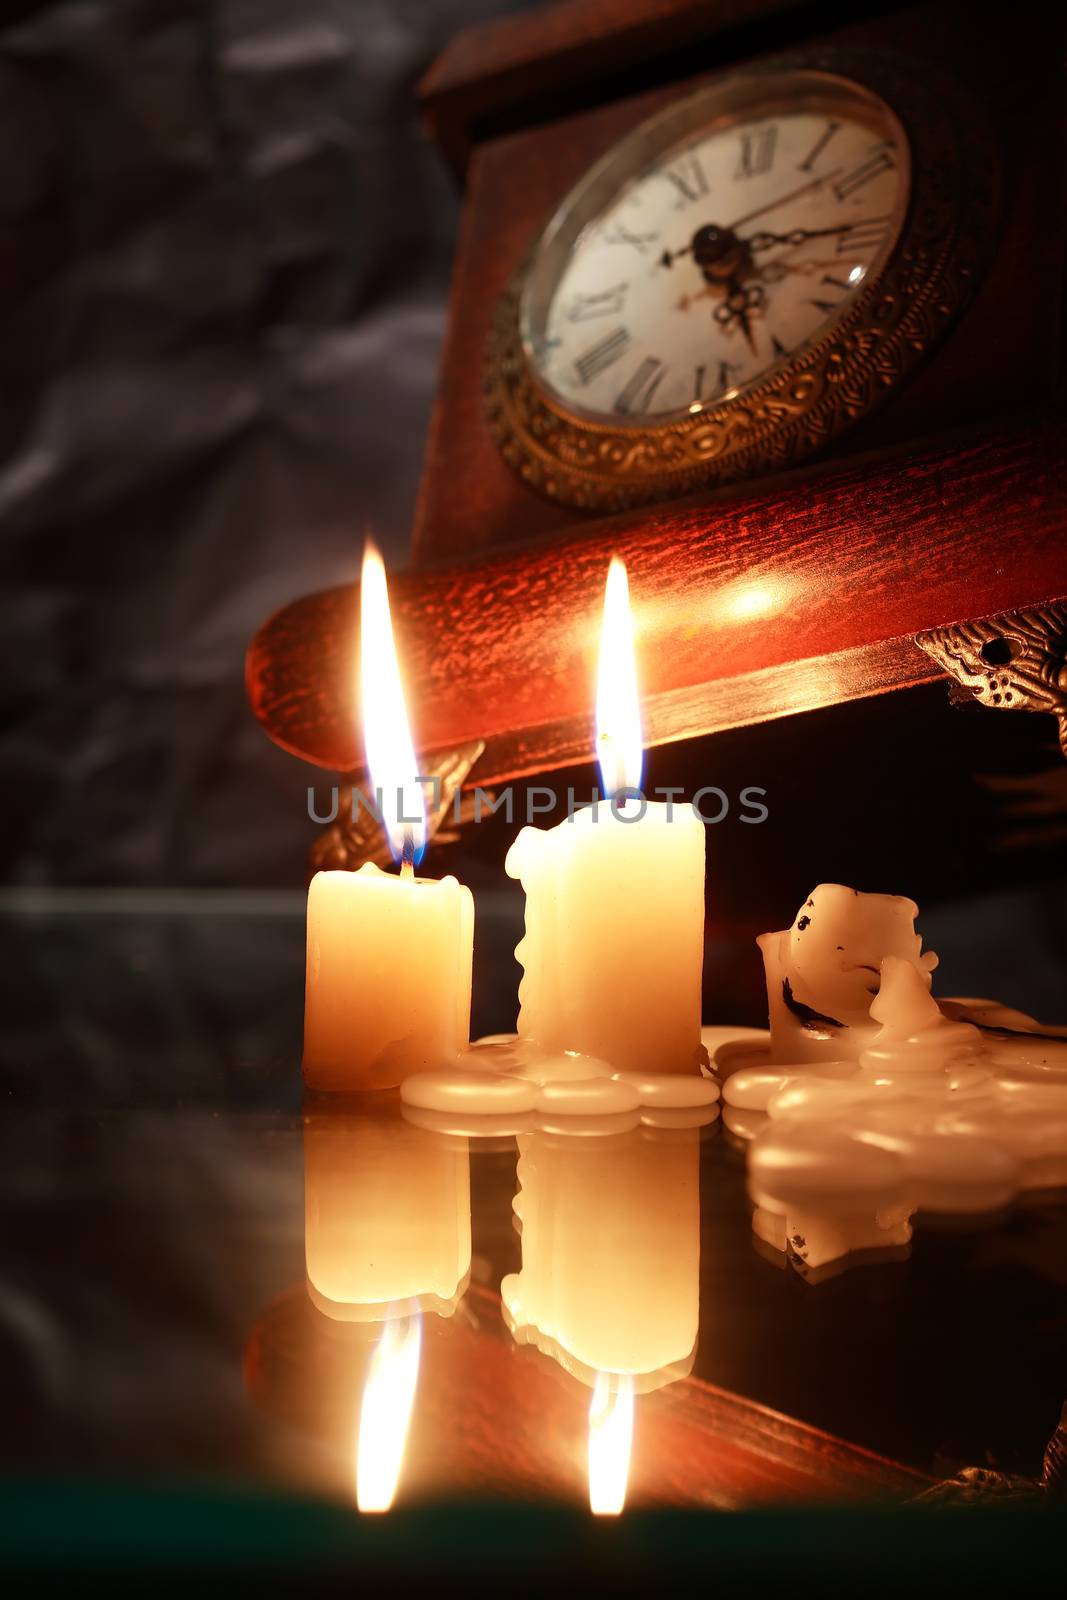 Candles Near Clock by kvkirillov